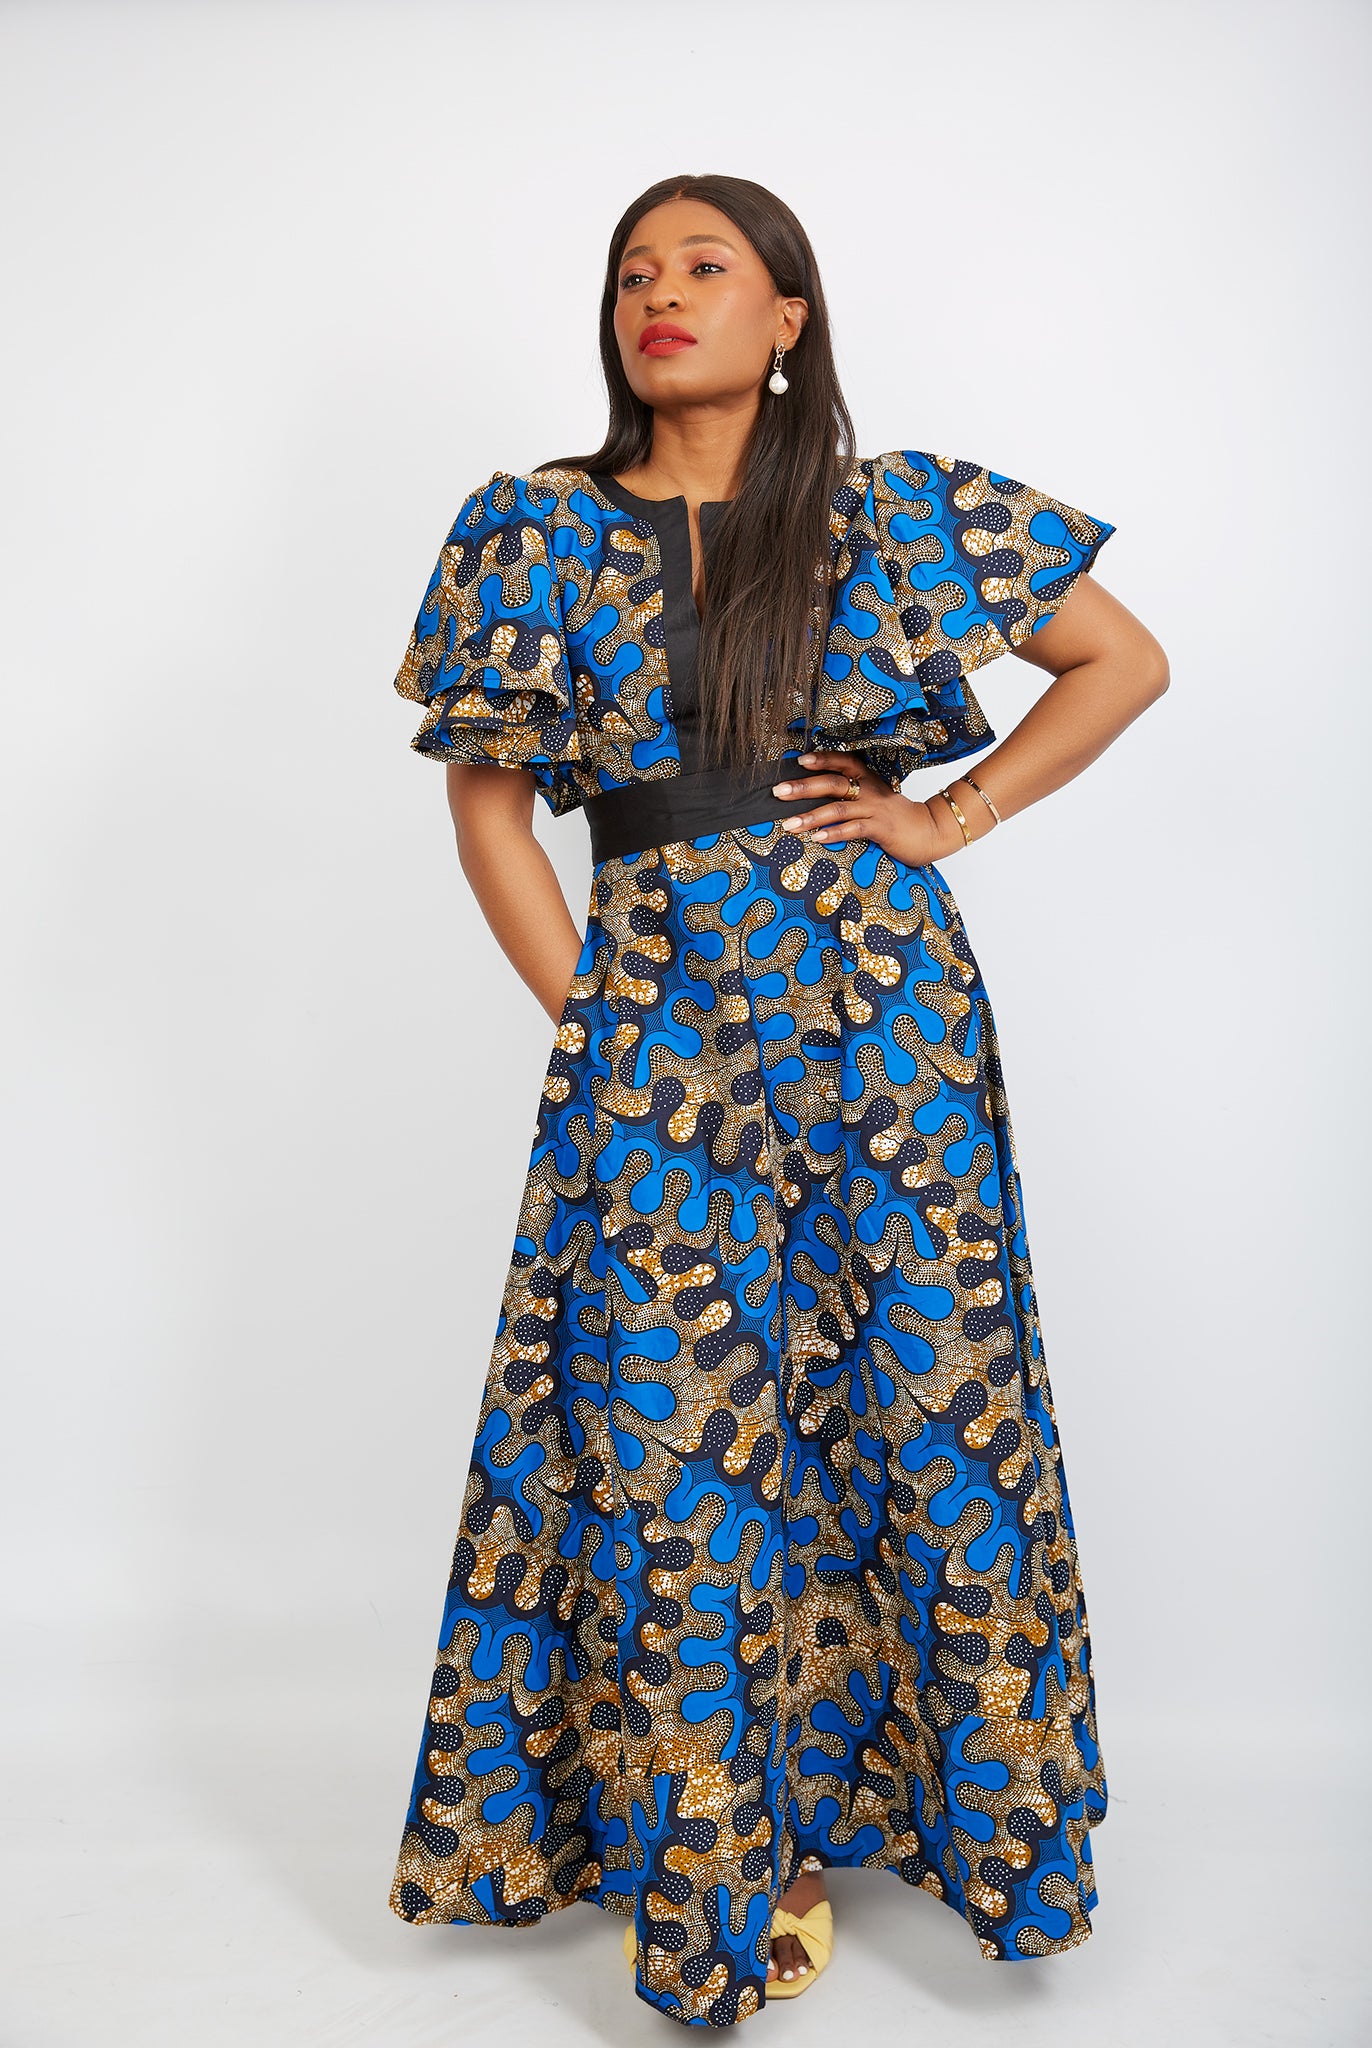 Plus Size African Queen Sweetheart Maxi Dress - Kipfashion